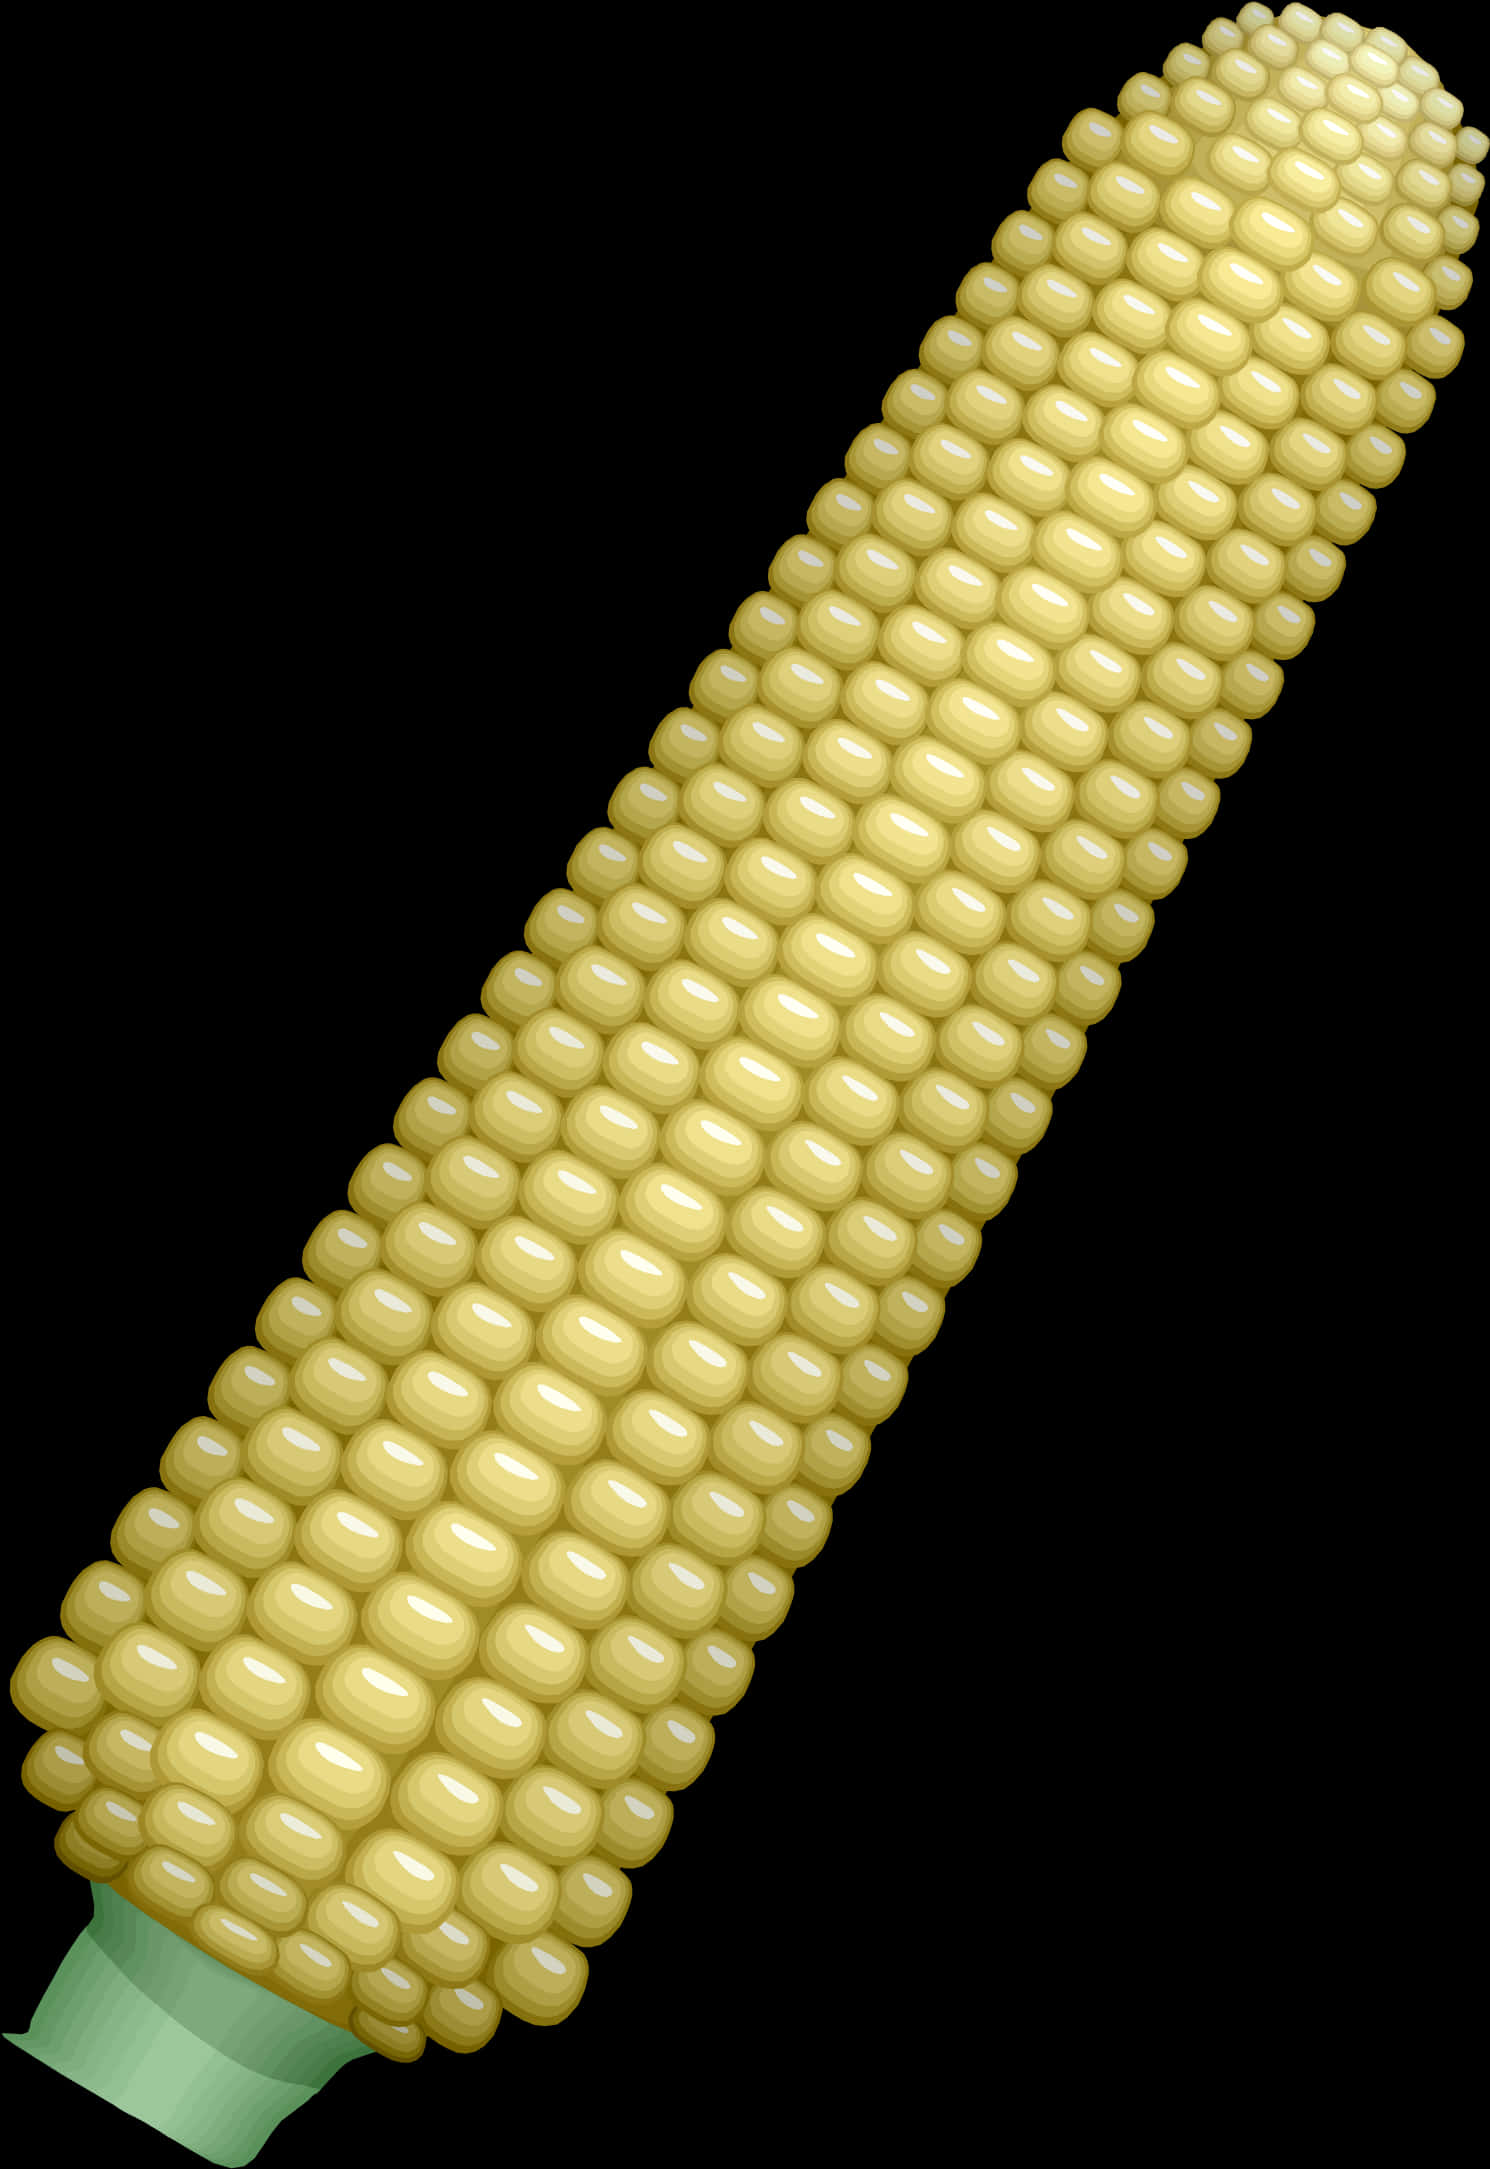 Golden Corn Cob Illustration PNG